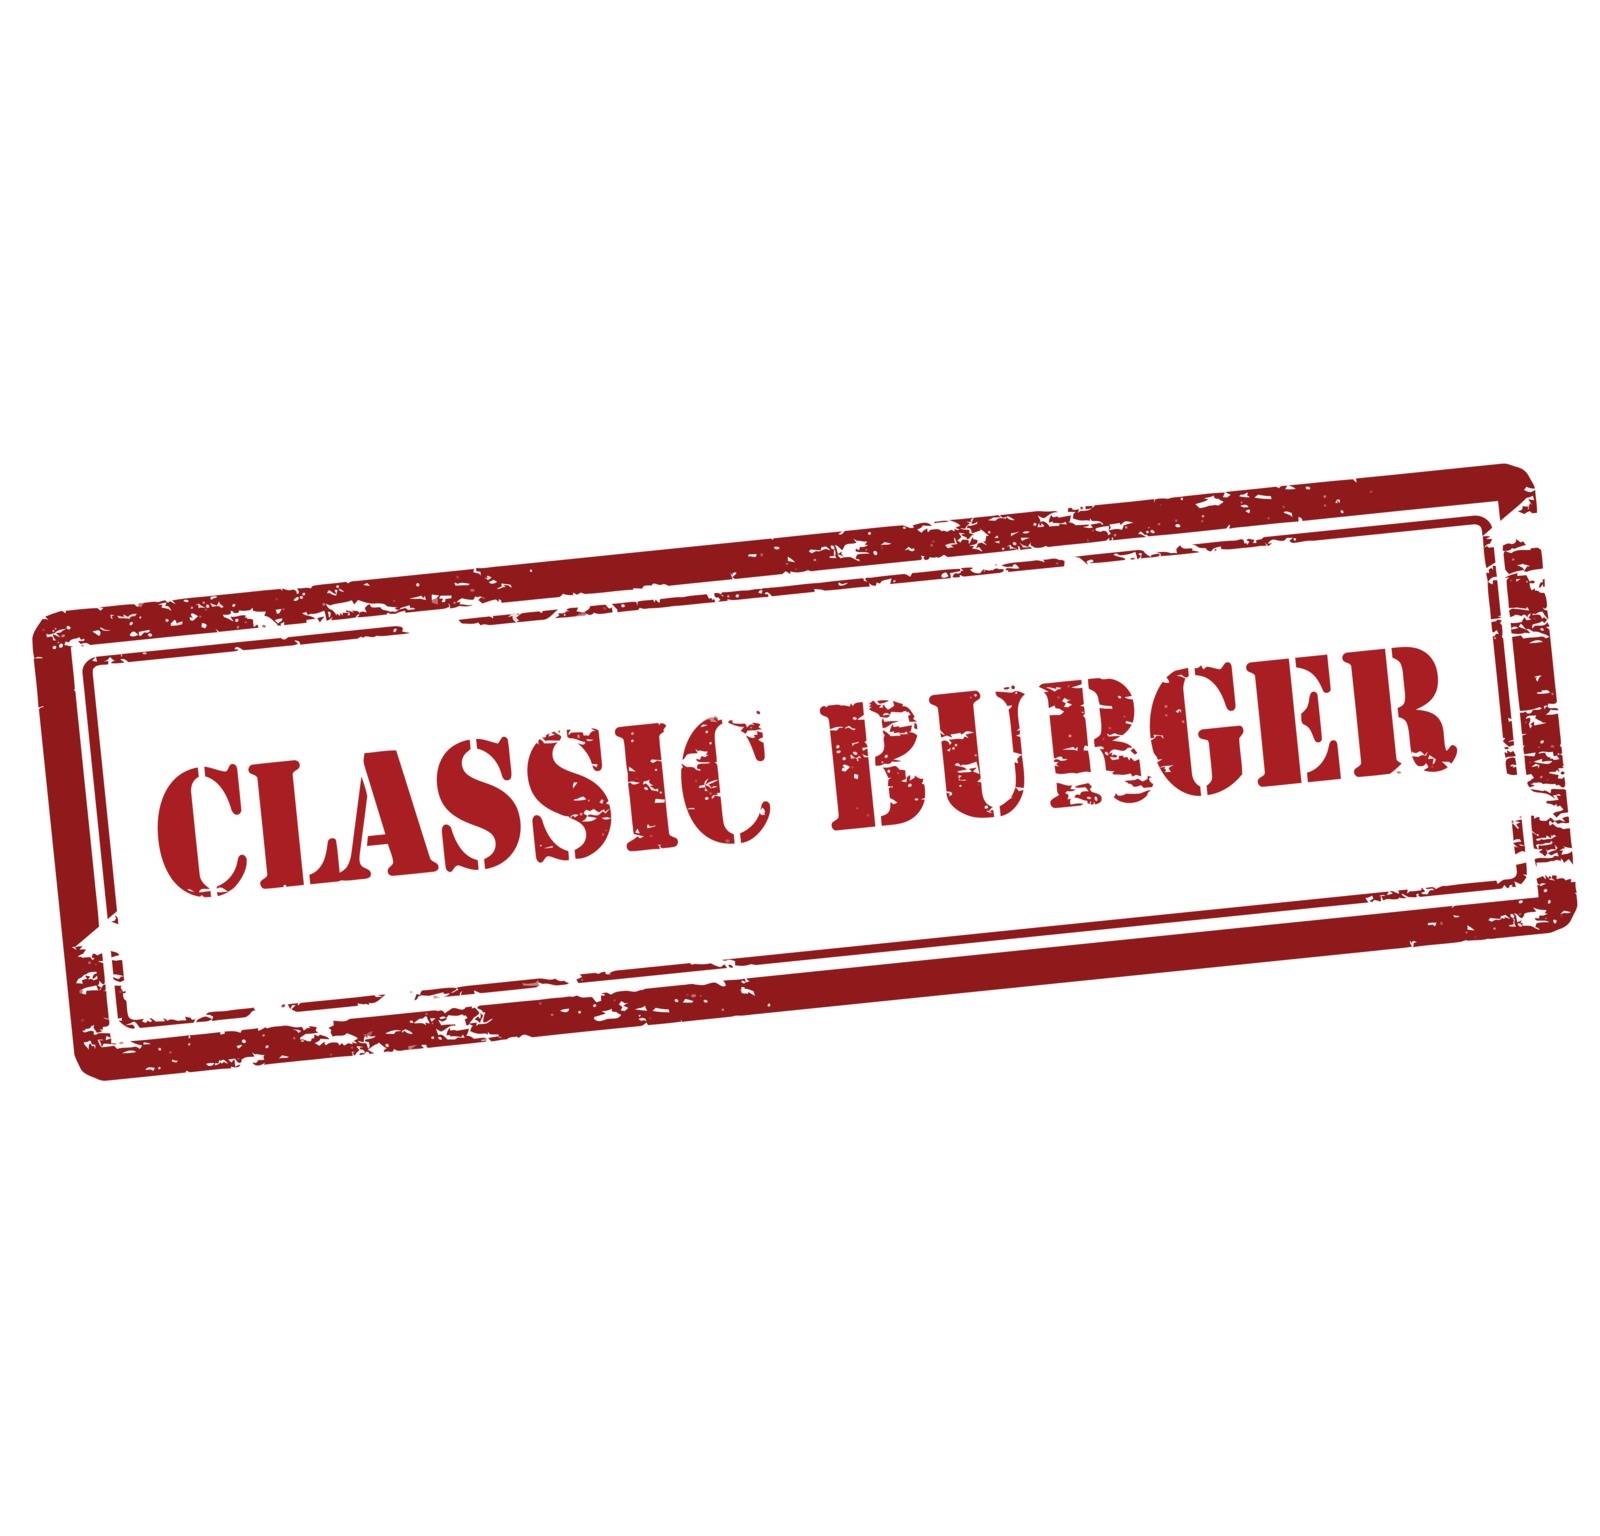 Classic burger by carmenbobo